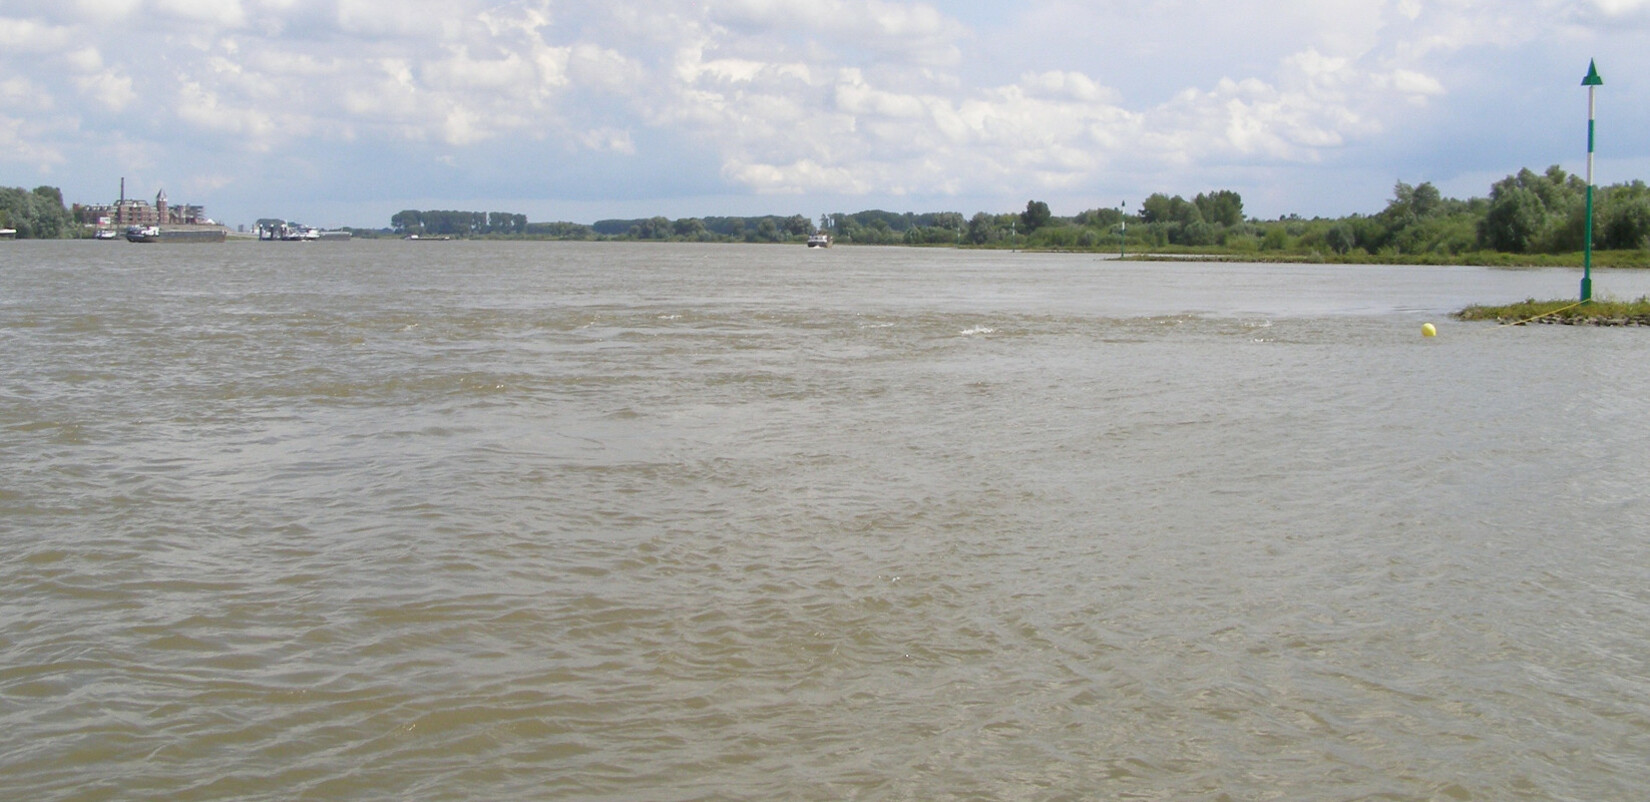 The river Rhine near Bimmen